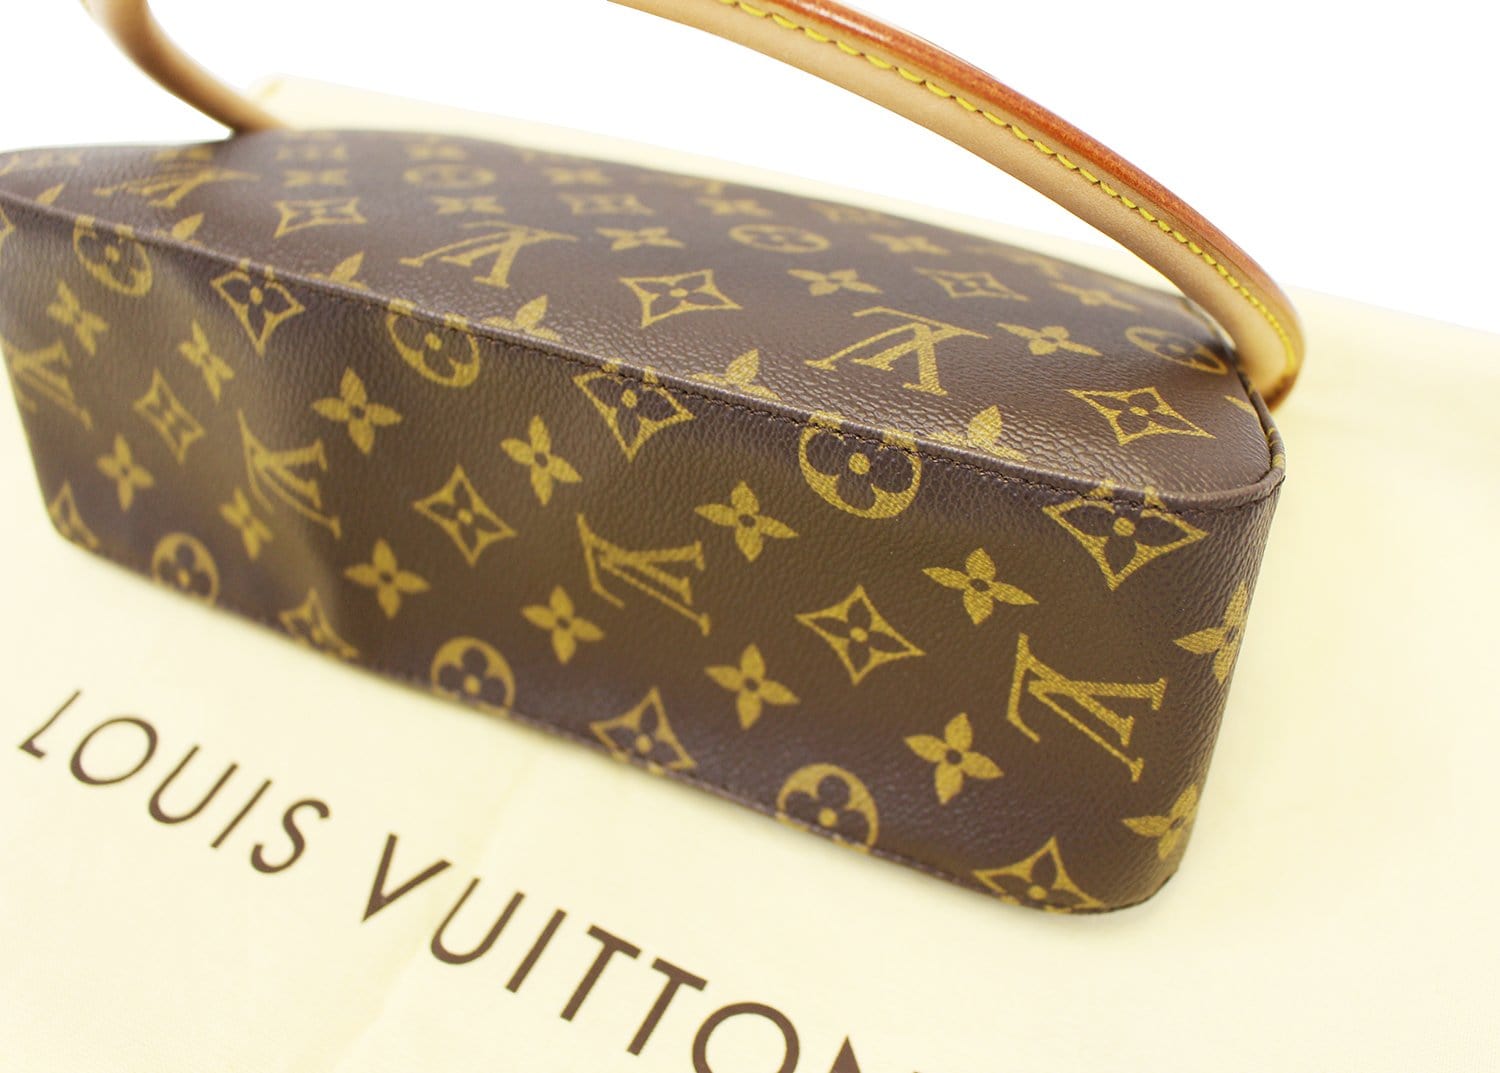 Louis Vuitton Mini Looping Bag - Farfetch